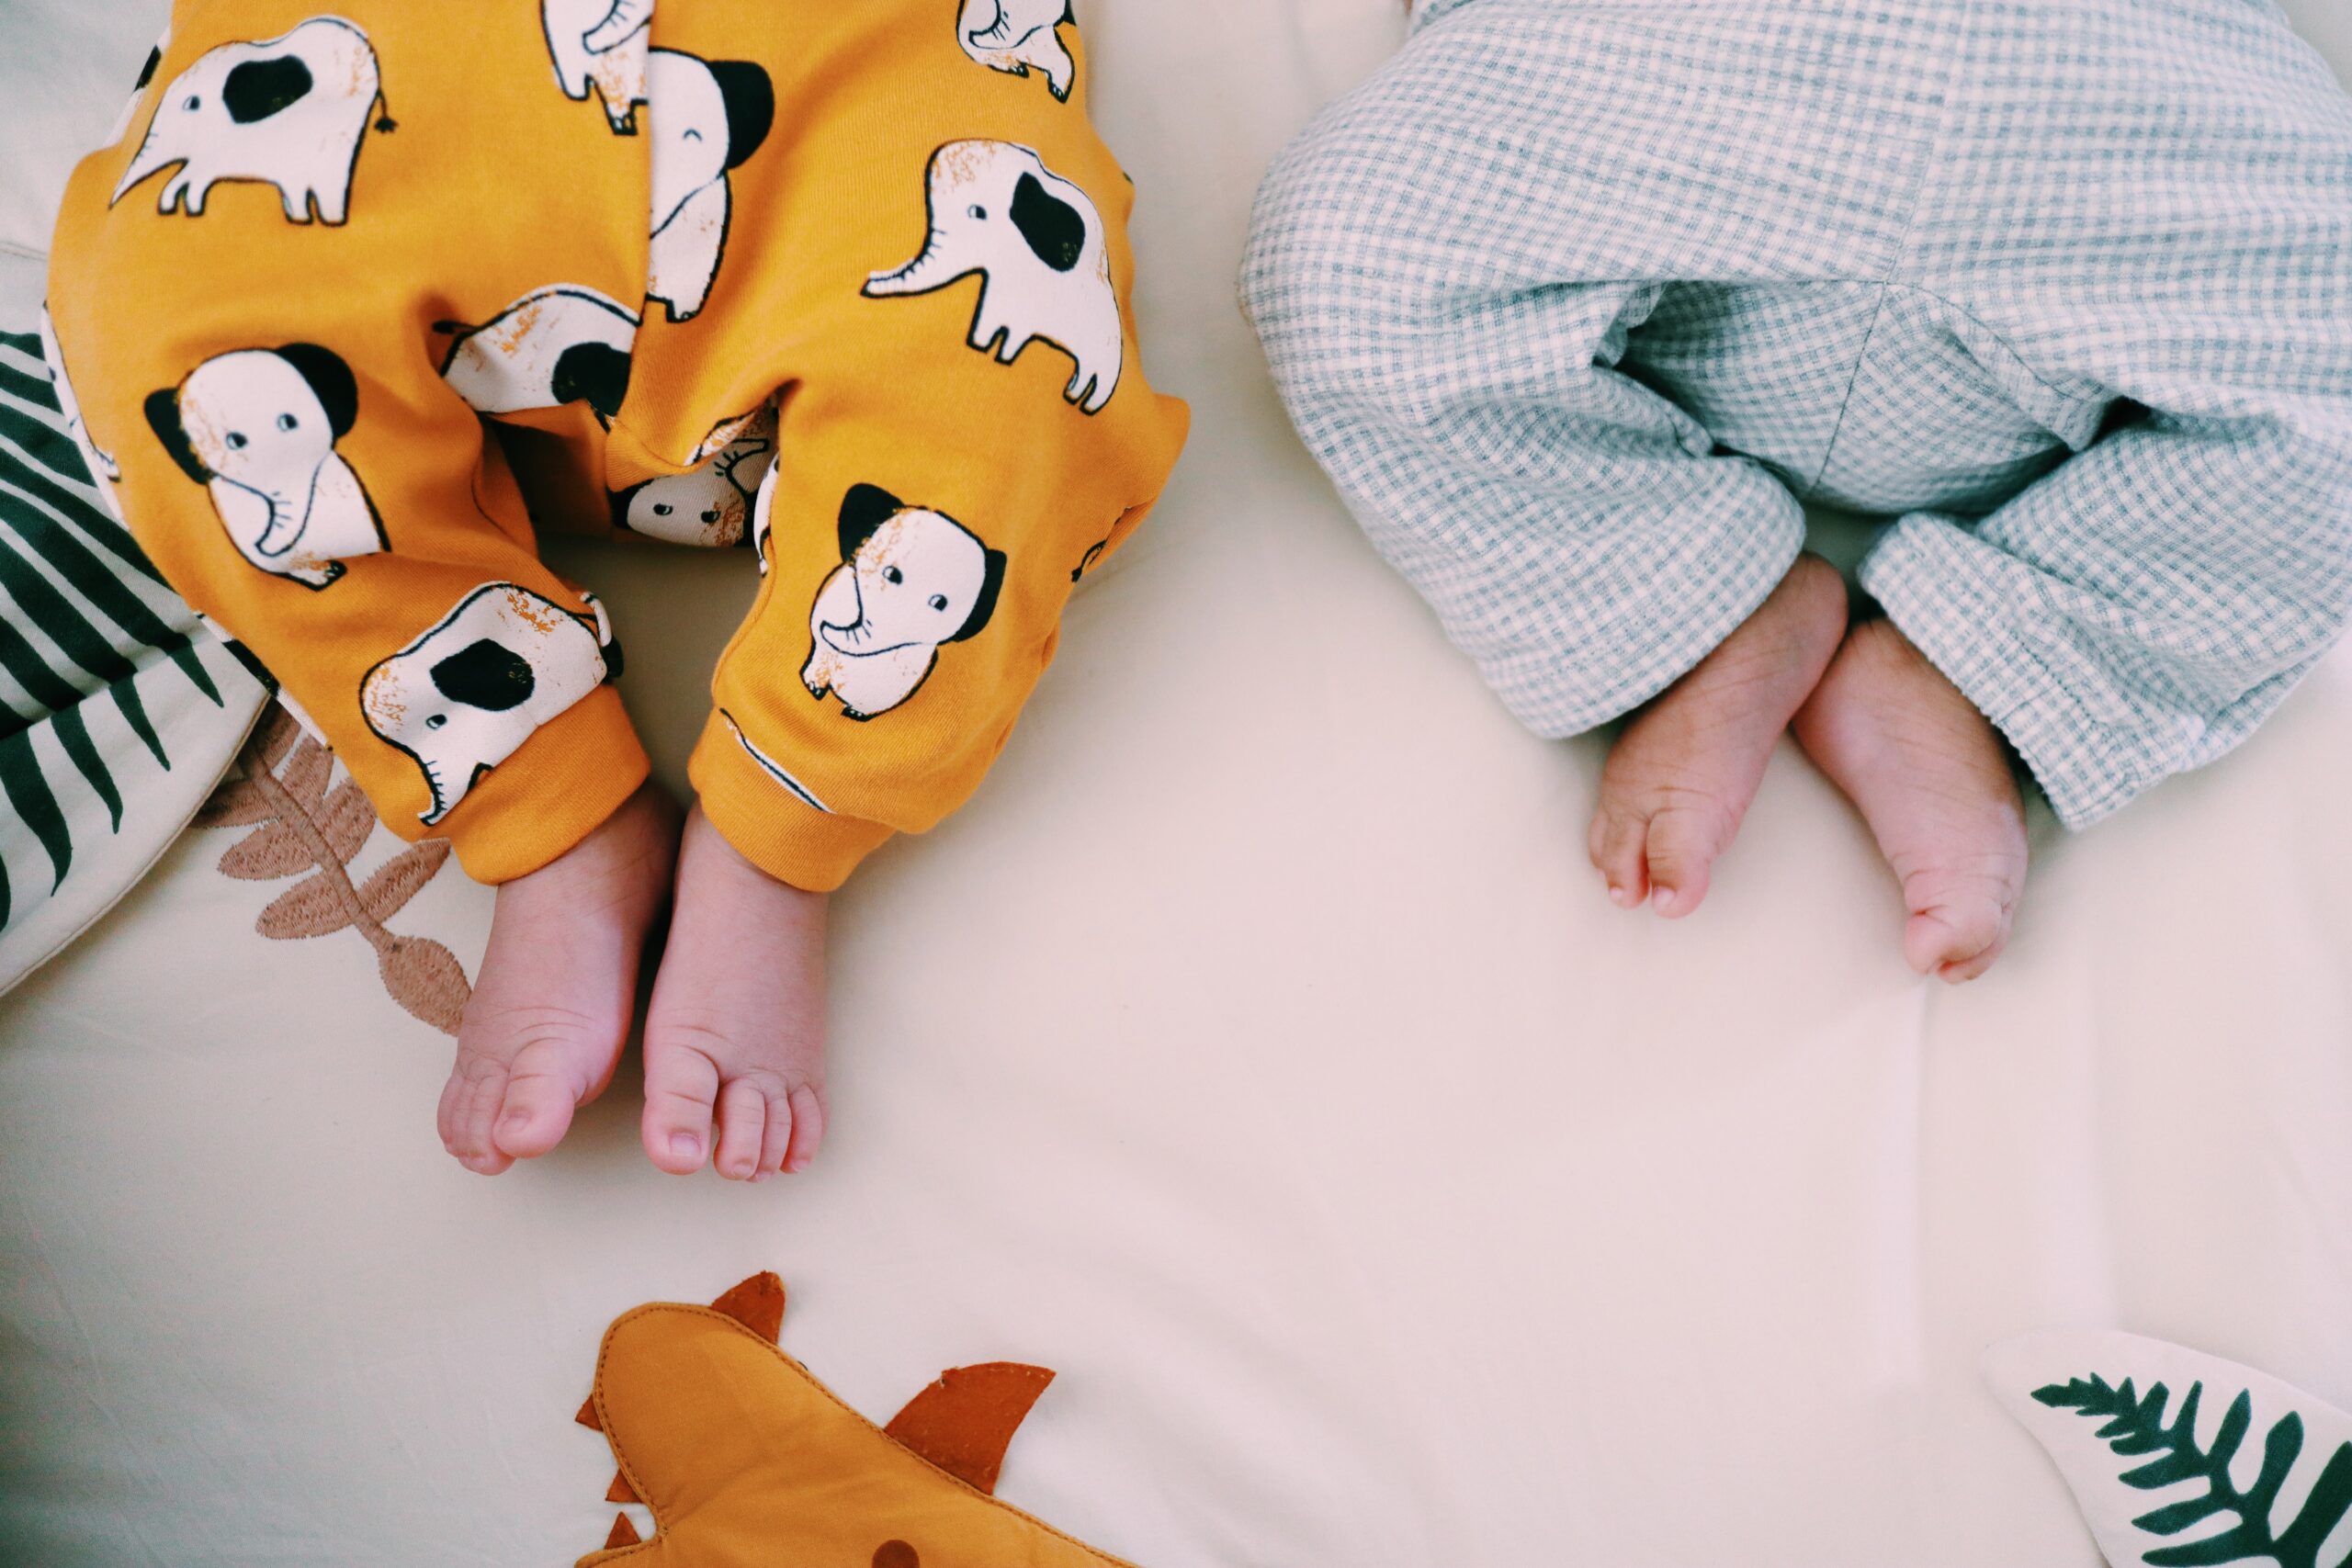 Zwillinge in Pyjamas liegen auf dem Bett.